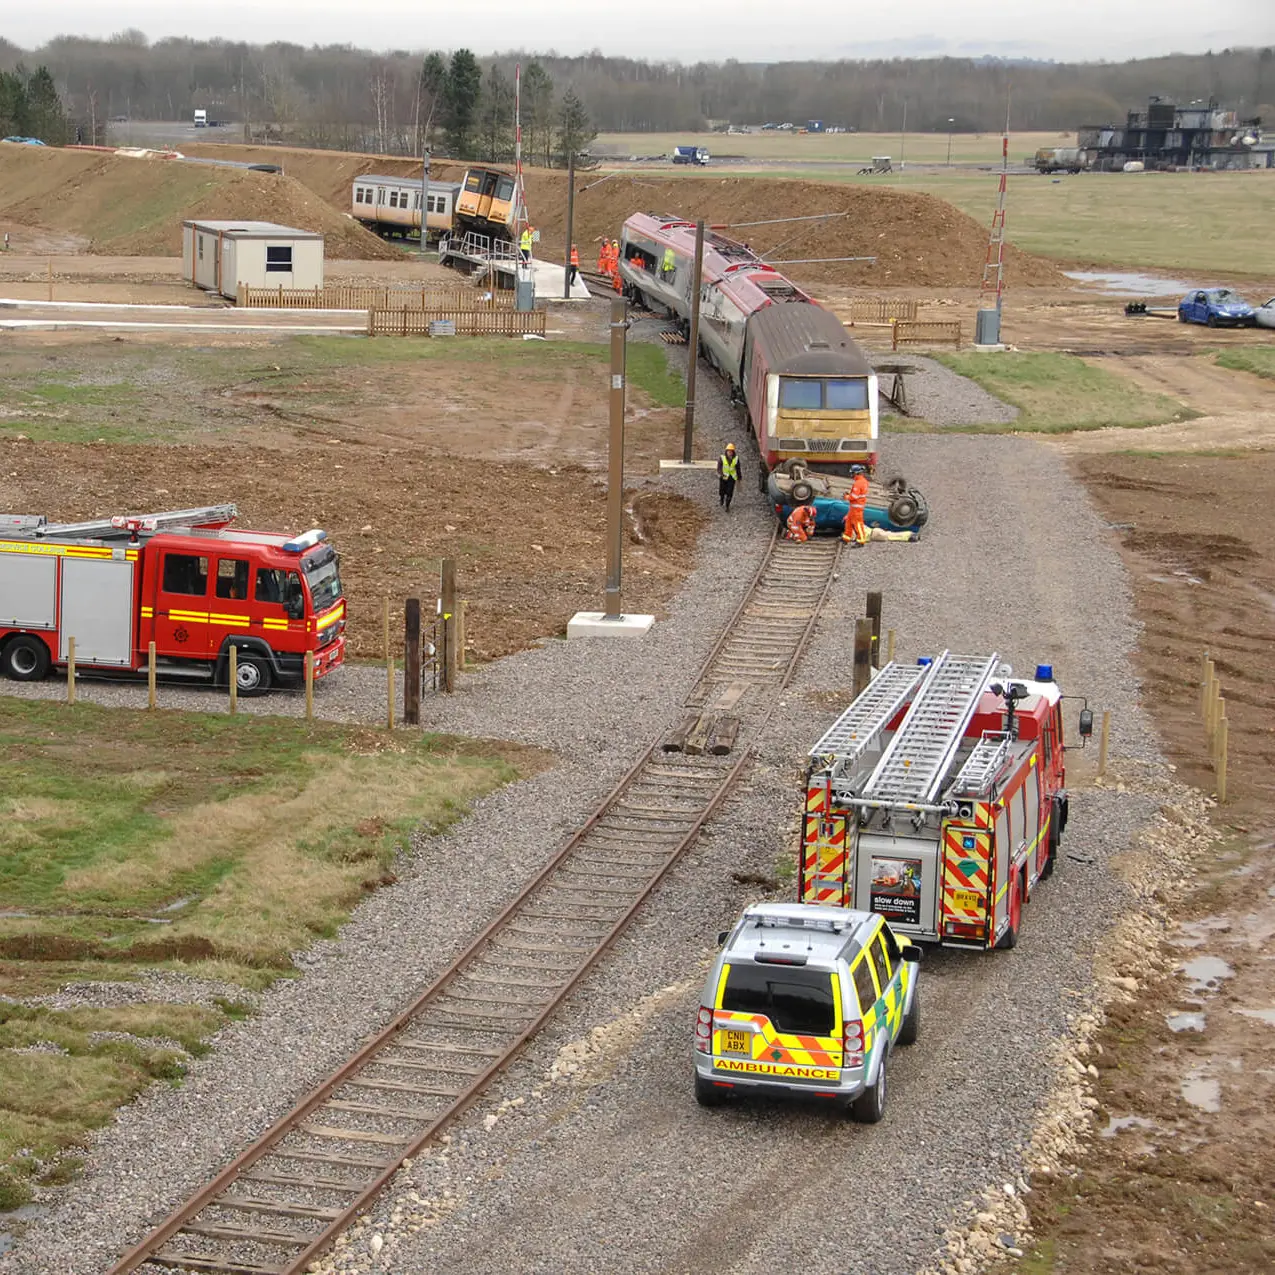 Fire training railway